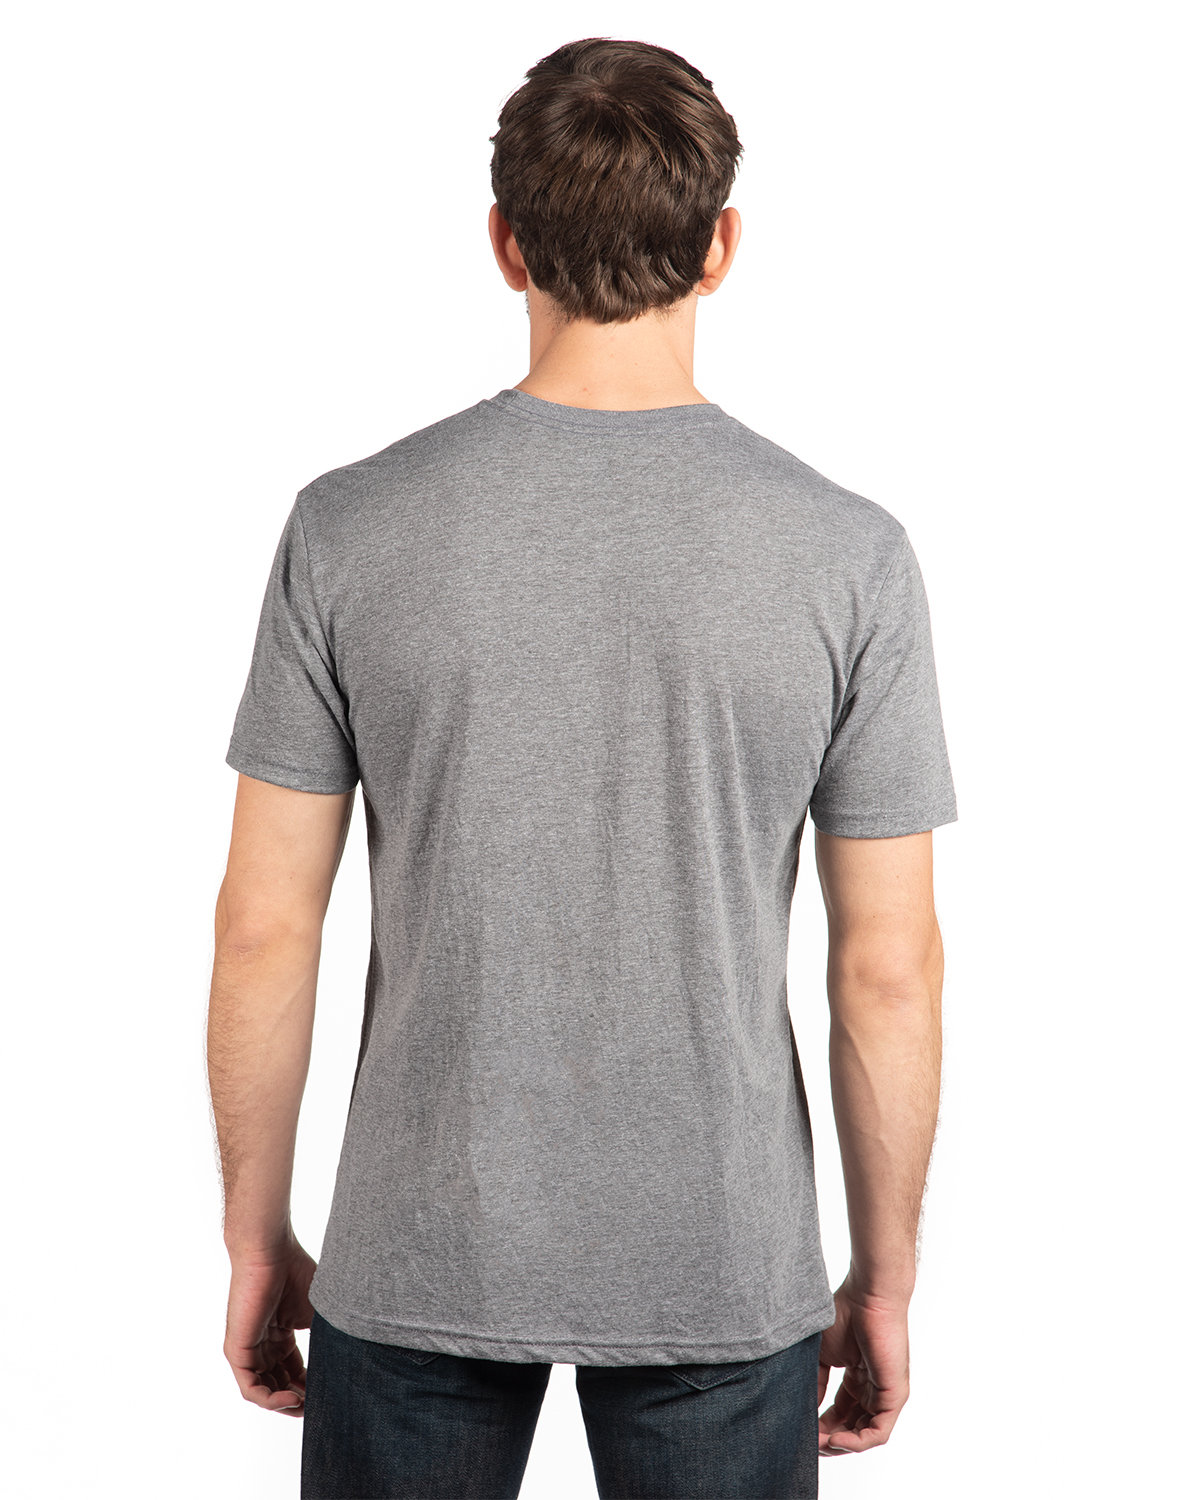 Next Level Apparel Unisex Triblend T-Shirt | alphabroder Canada